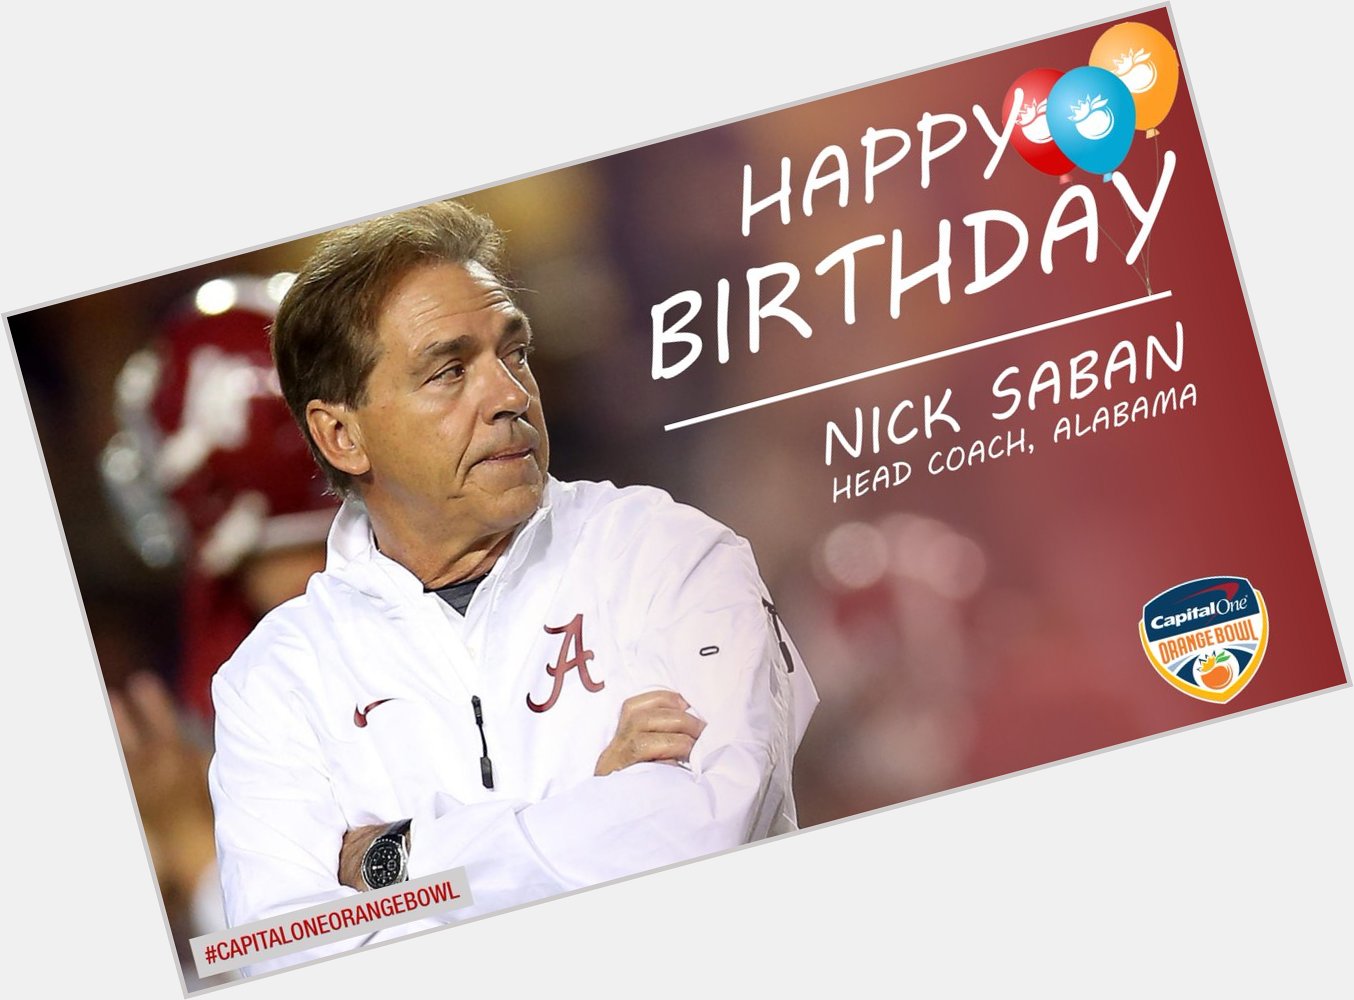 Happy birthday to Head Coach, Nick Saban!    